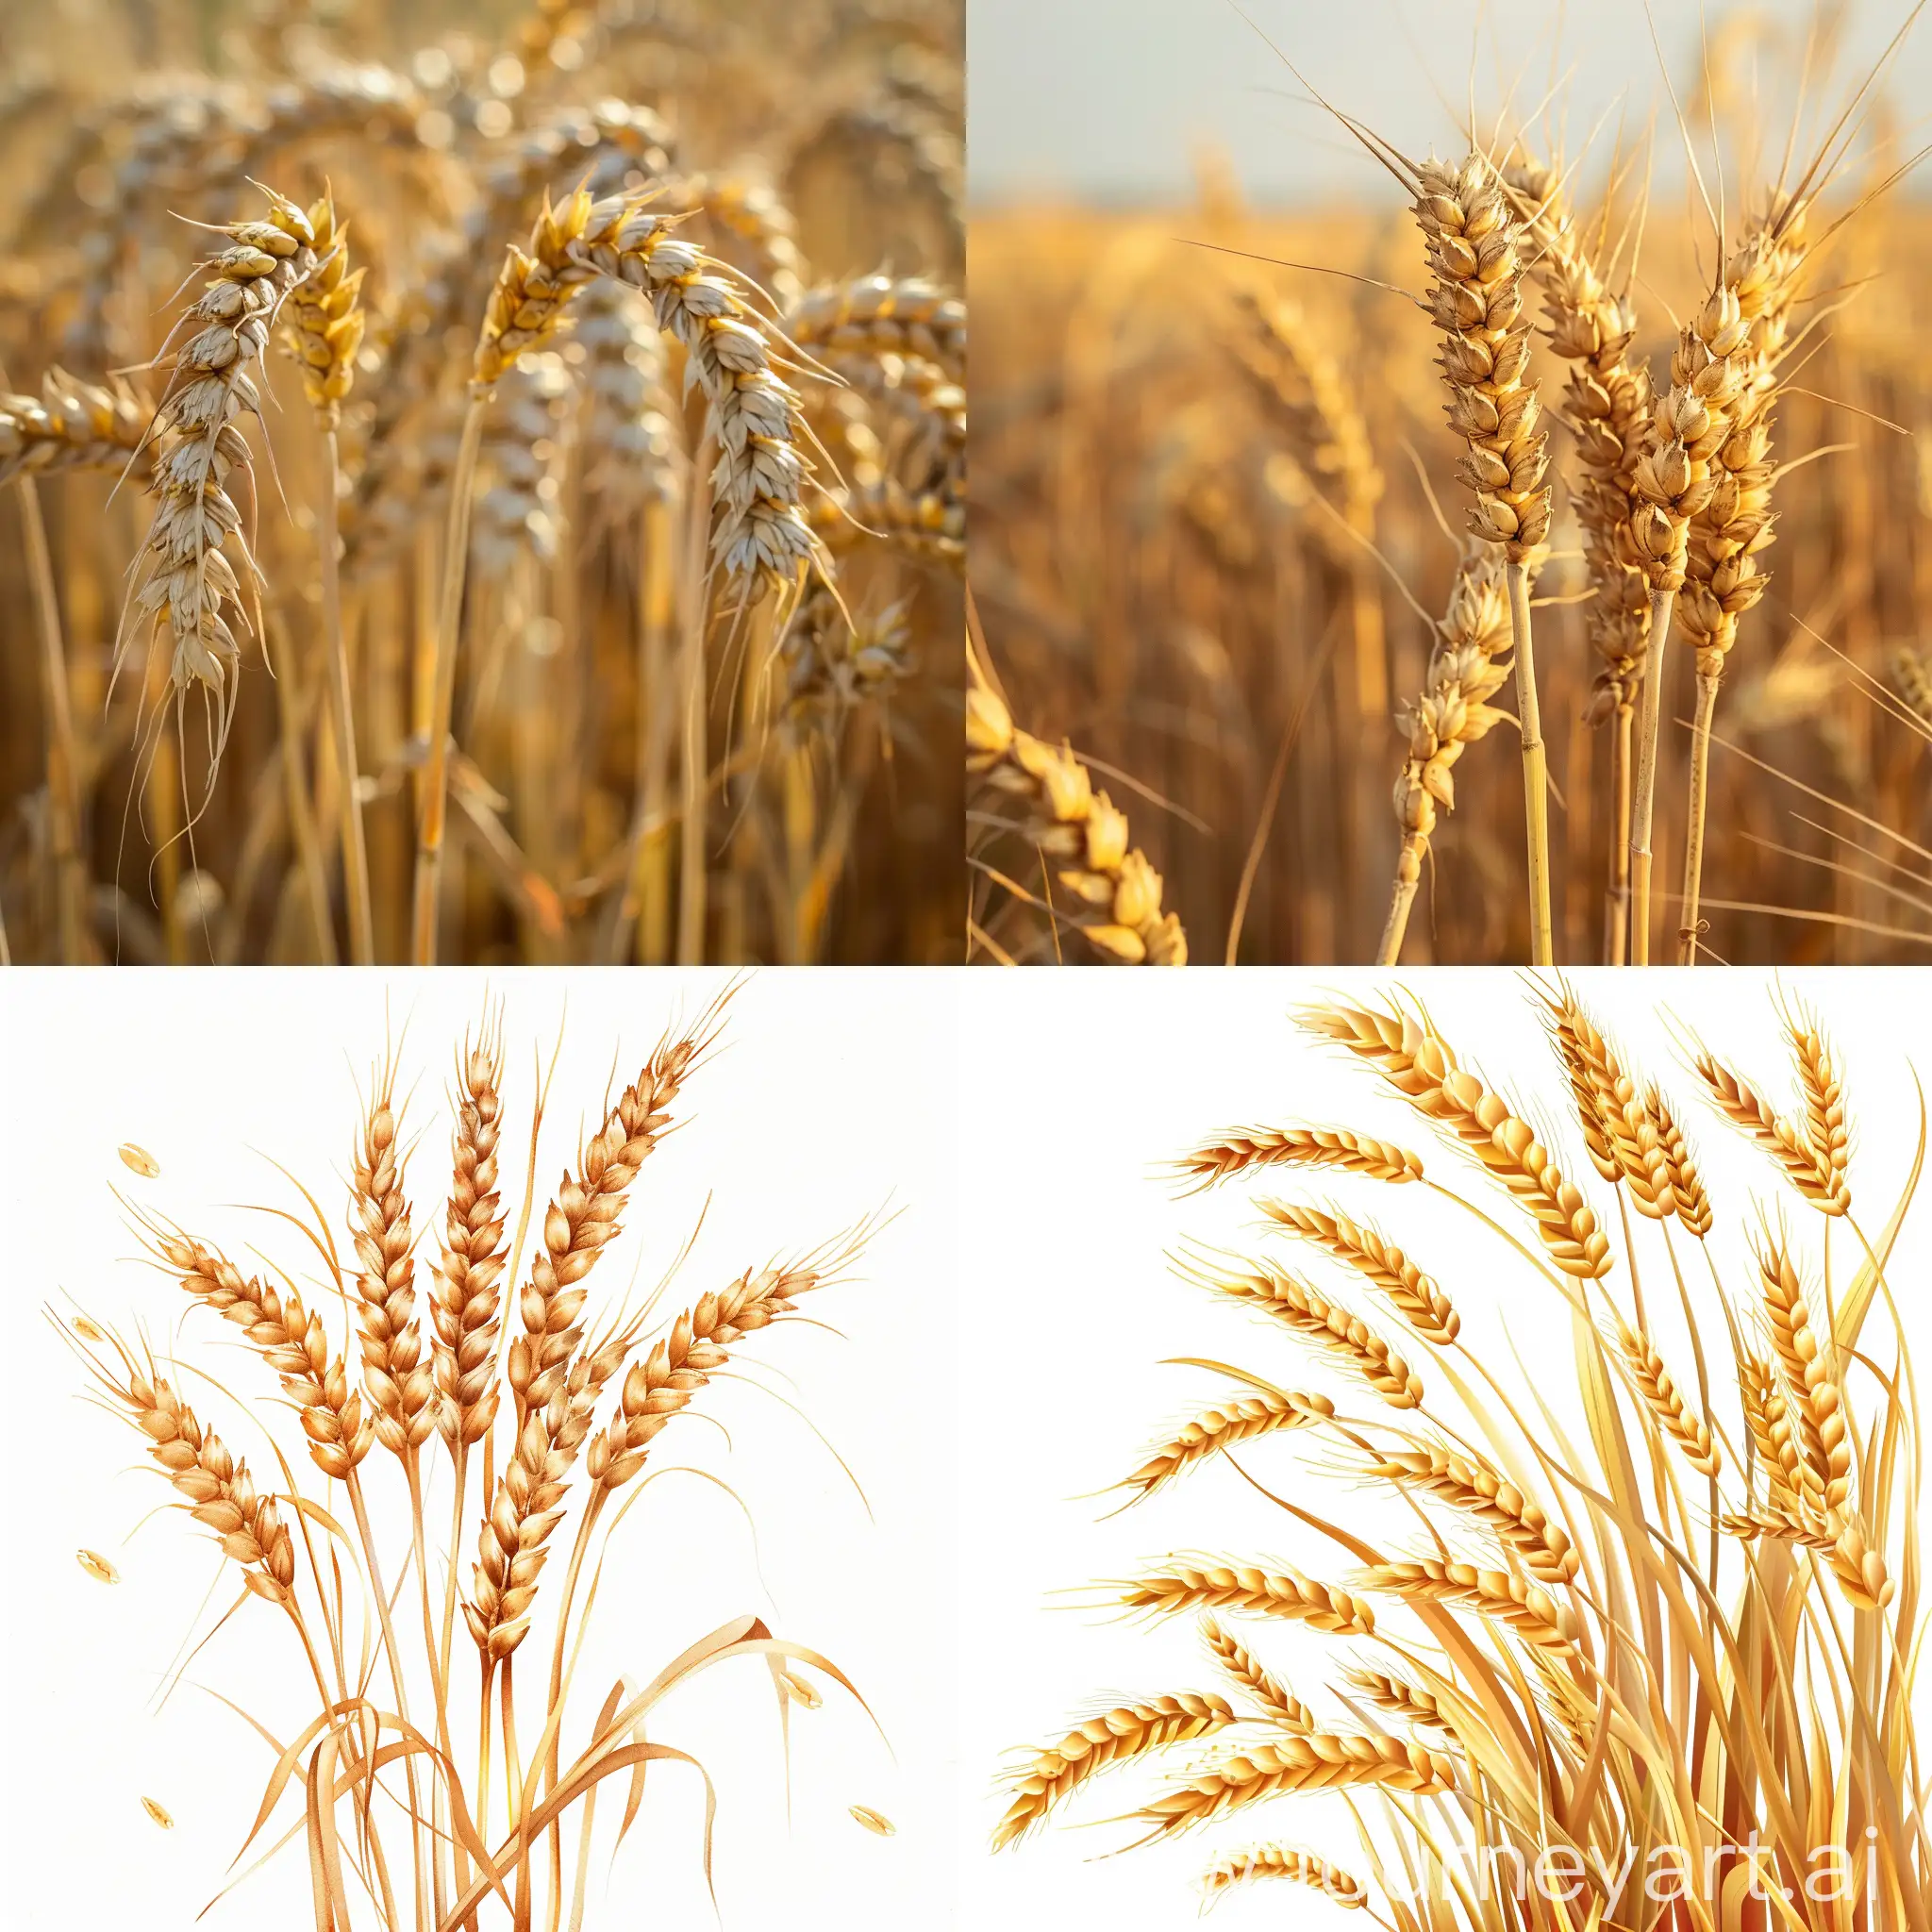 Vibrant-Wheat-Field-Illustration-with-Sunlight-Filtering-Through-the-Stalks